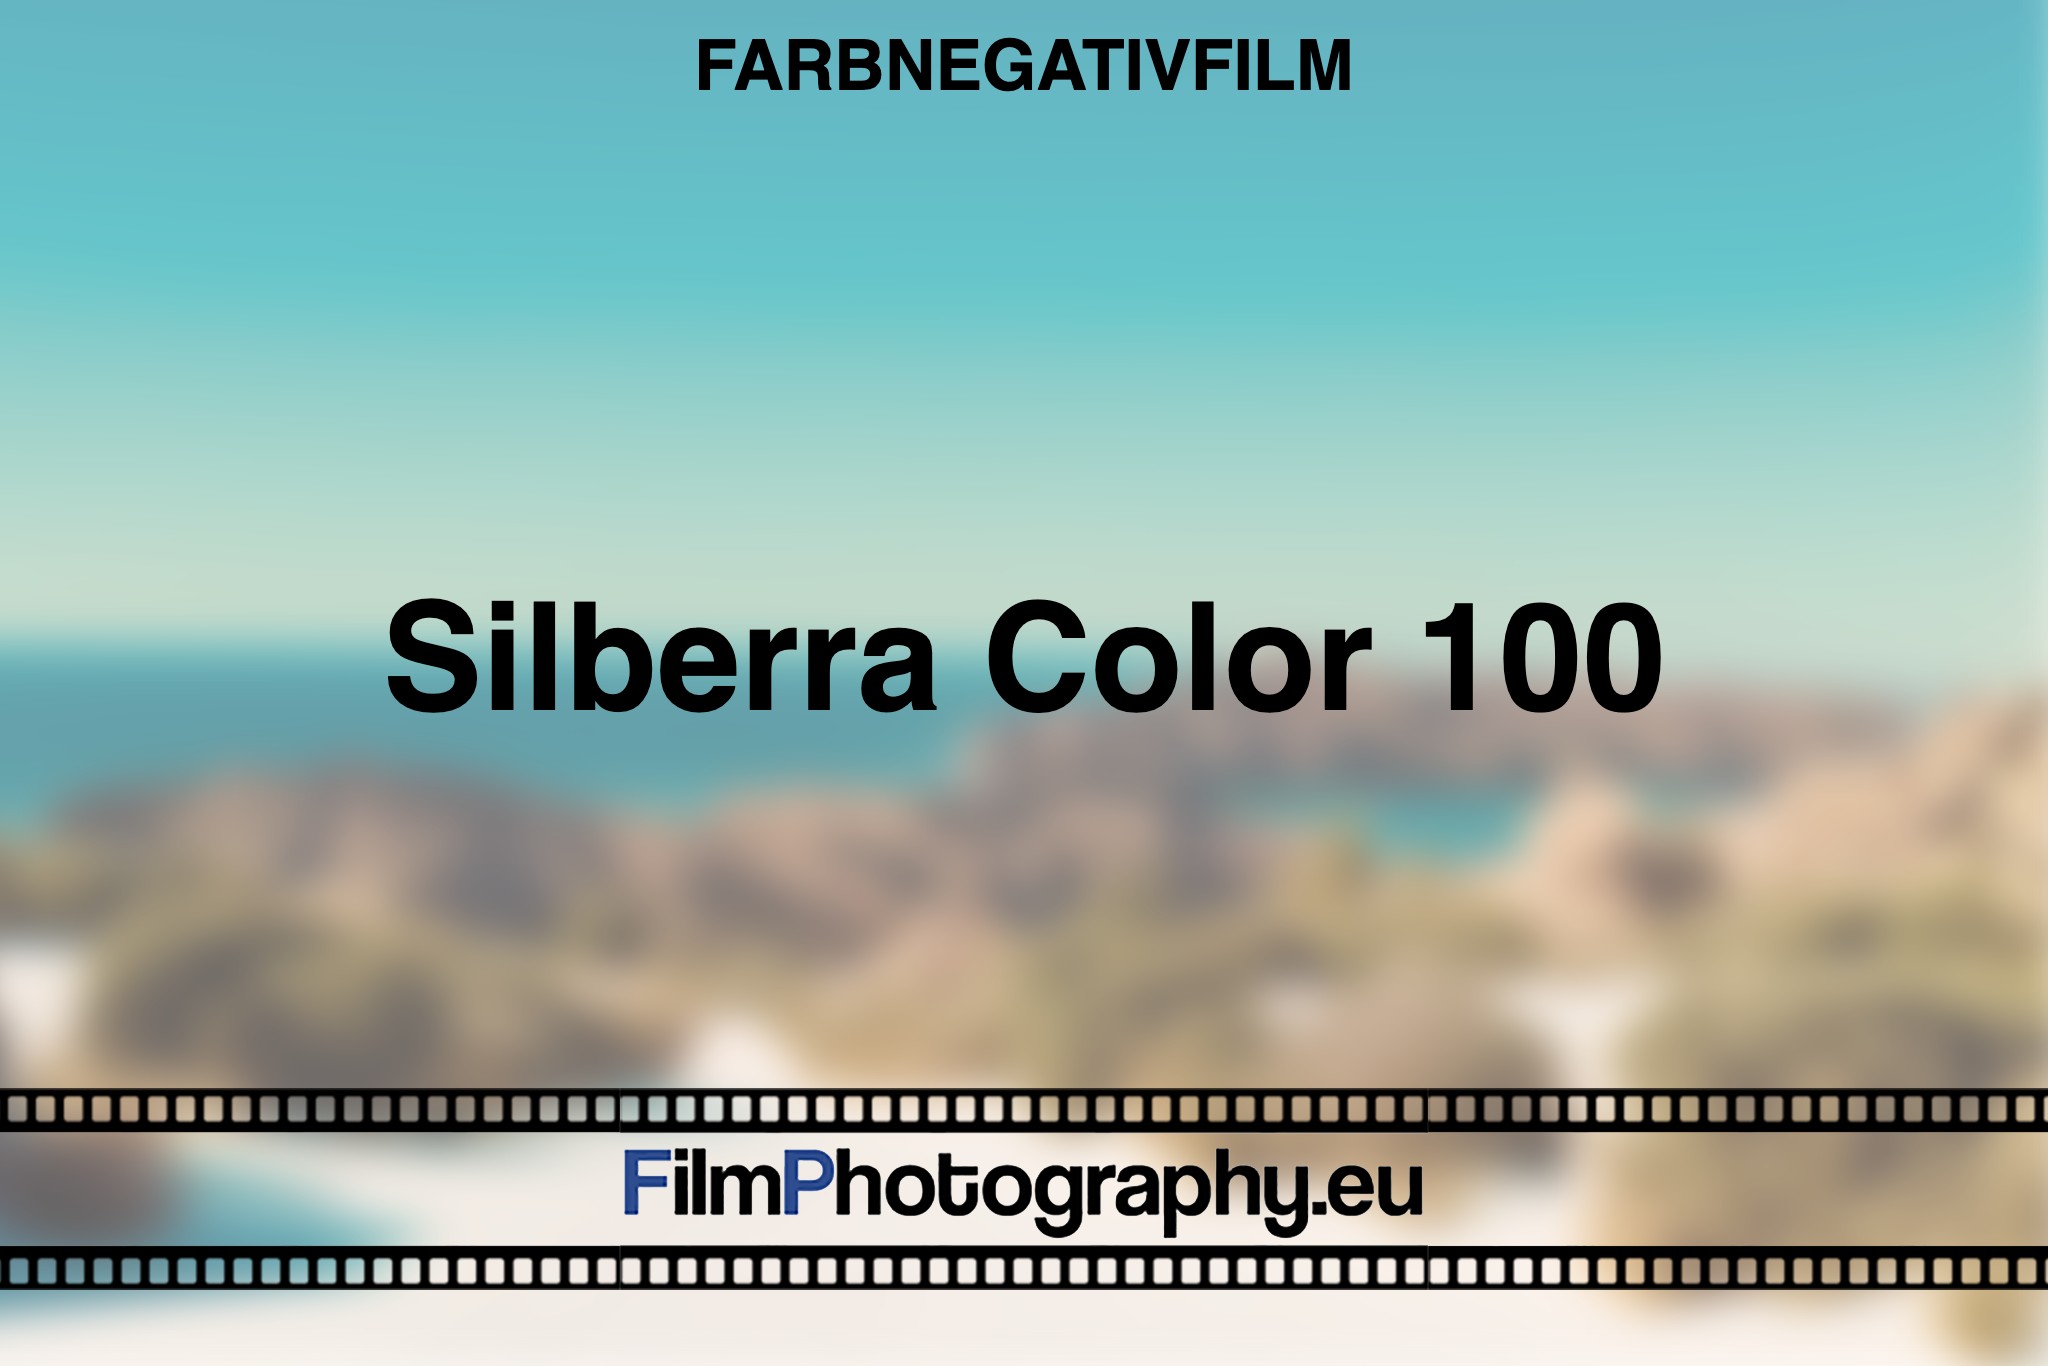 silberra-color-100-farbnegativfilm-bnv